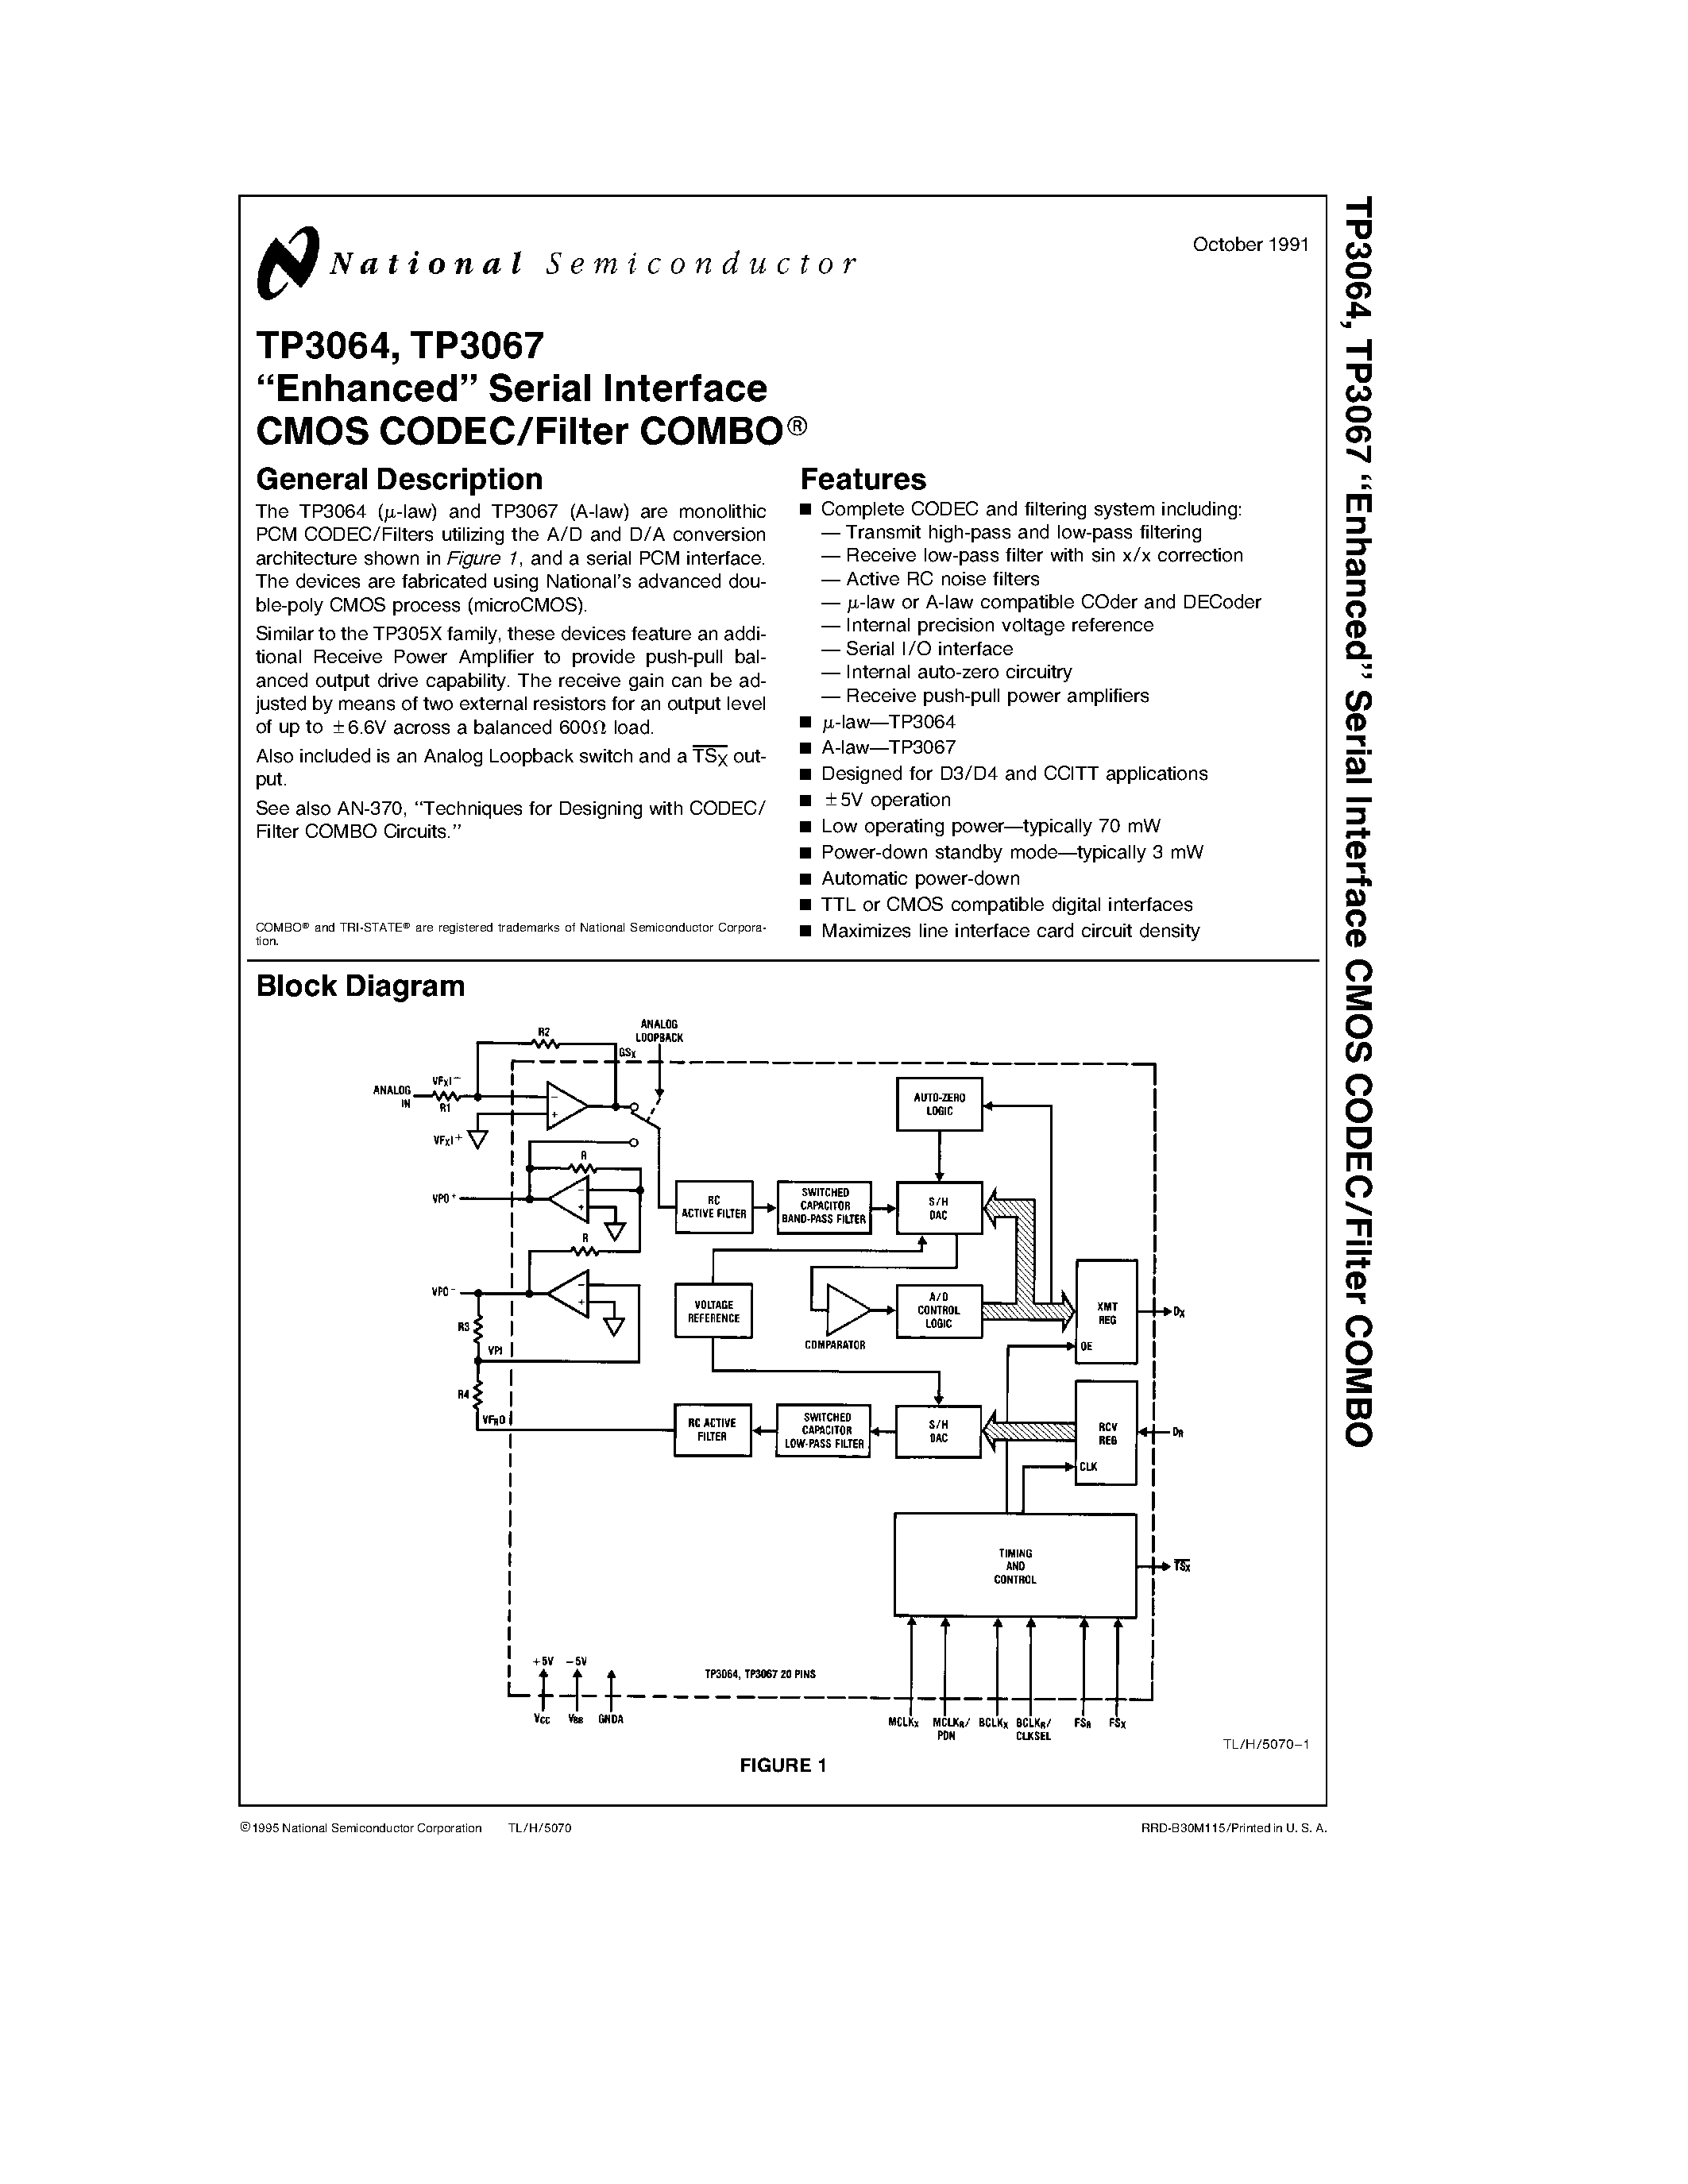 Даташит TP3067V - Enhanced Serial Interface CMOS CODEC/Filter COMBO страница 1